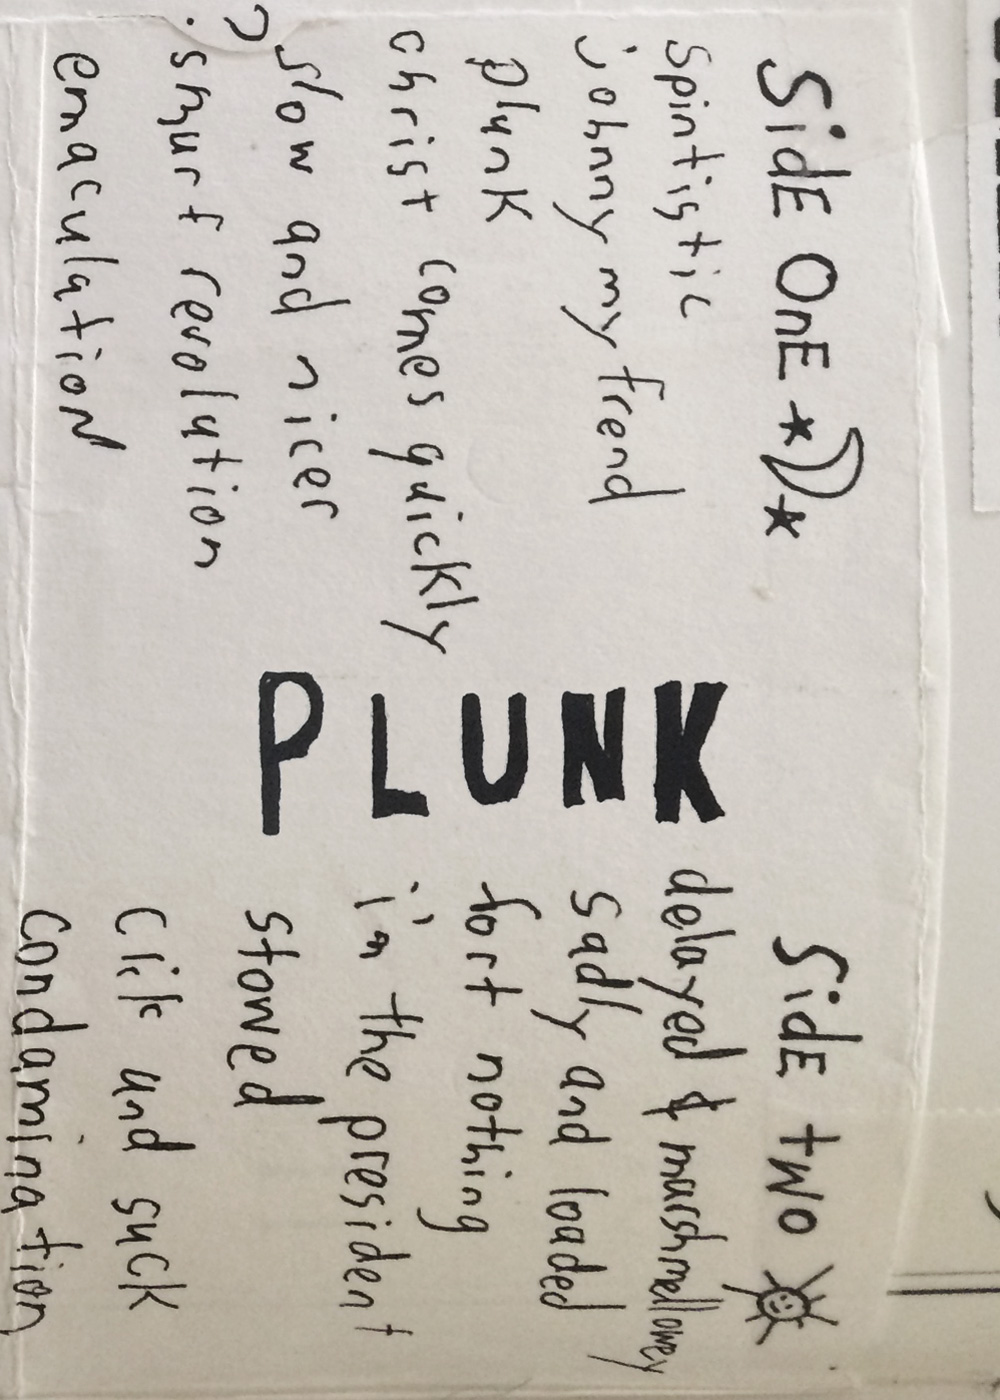 Cassette tape artwork for "Plunk"